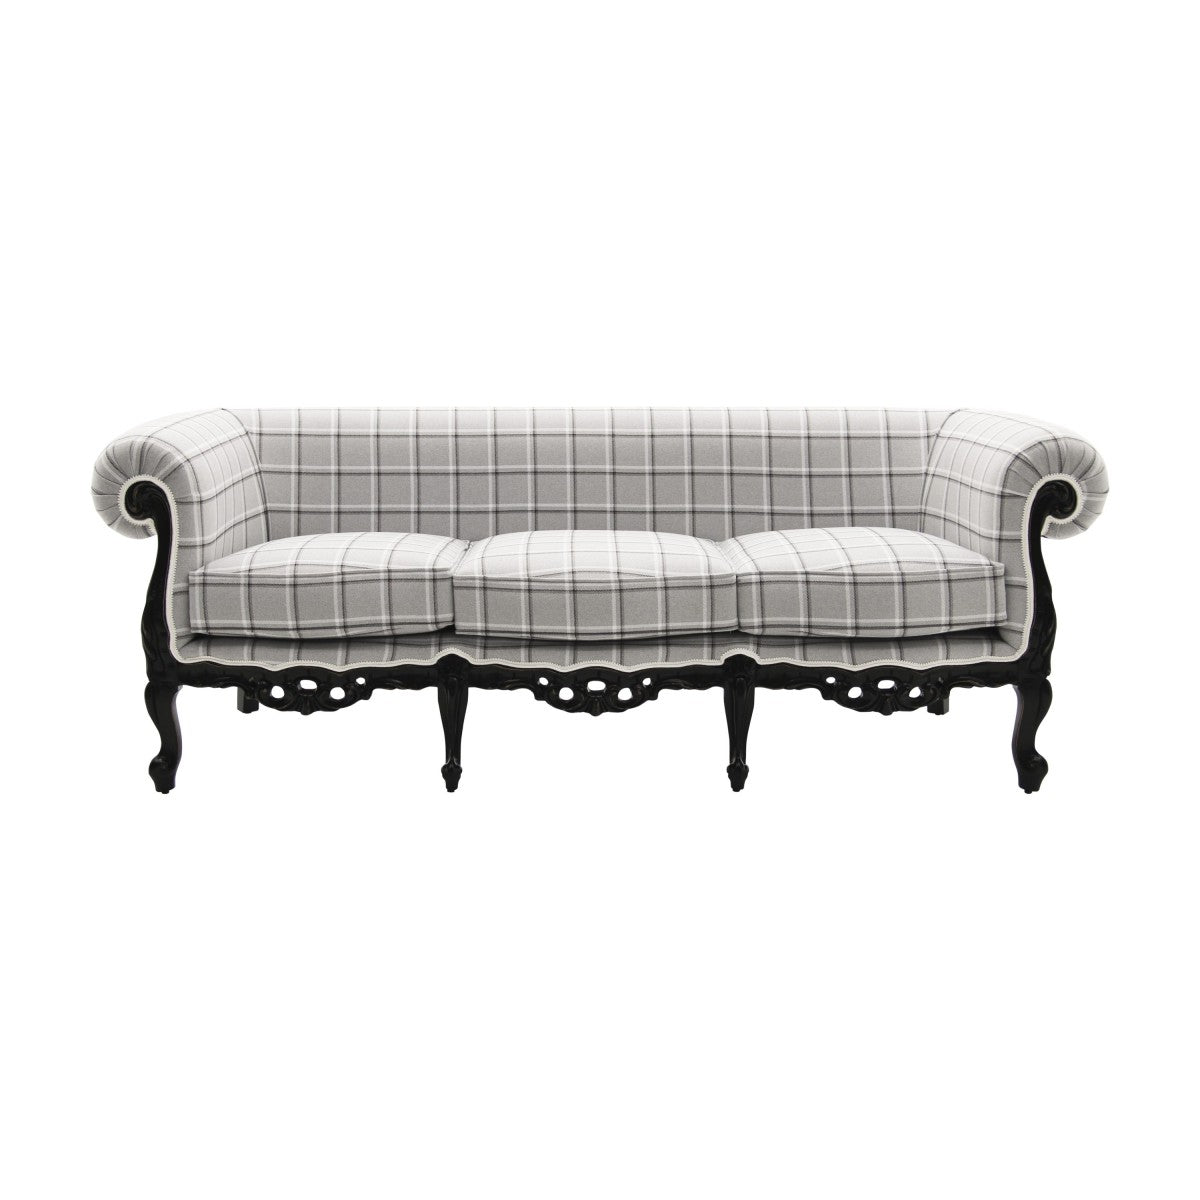 Febo Bespoke Upholstered Baroque Style Three Seater Sofa MS9100E Custom Made To Order